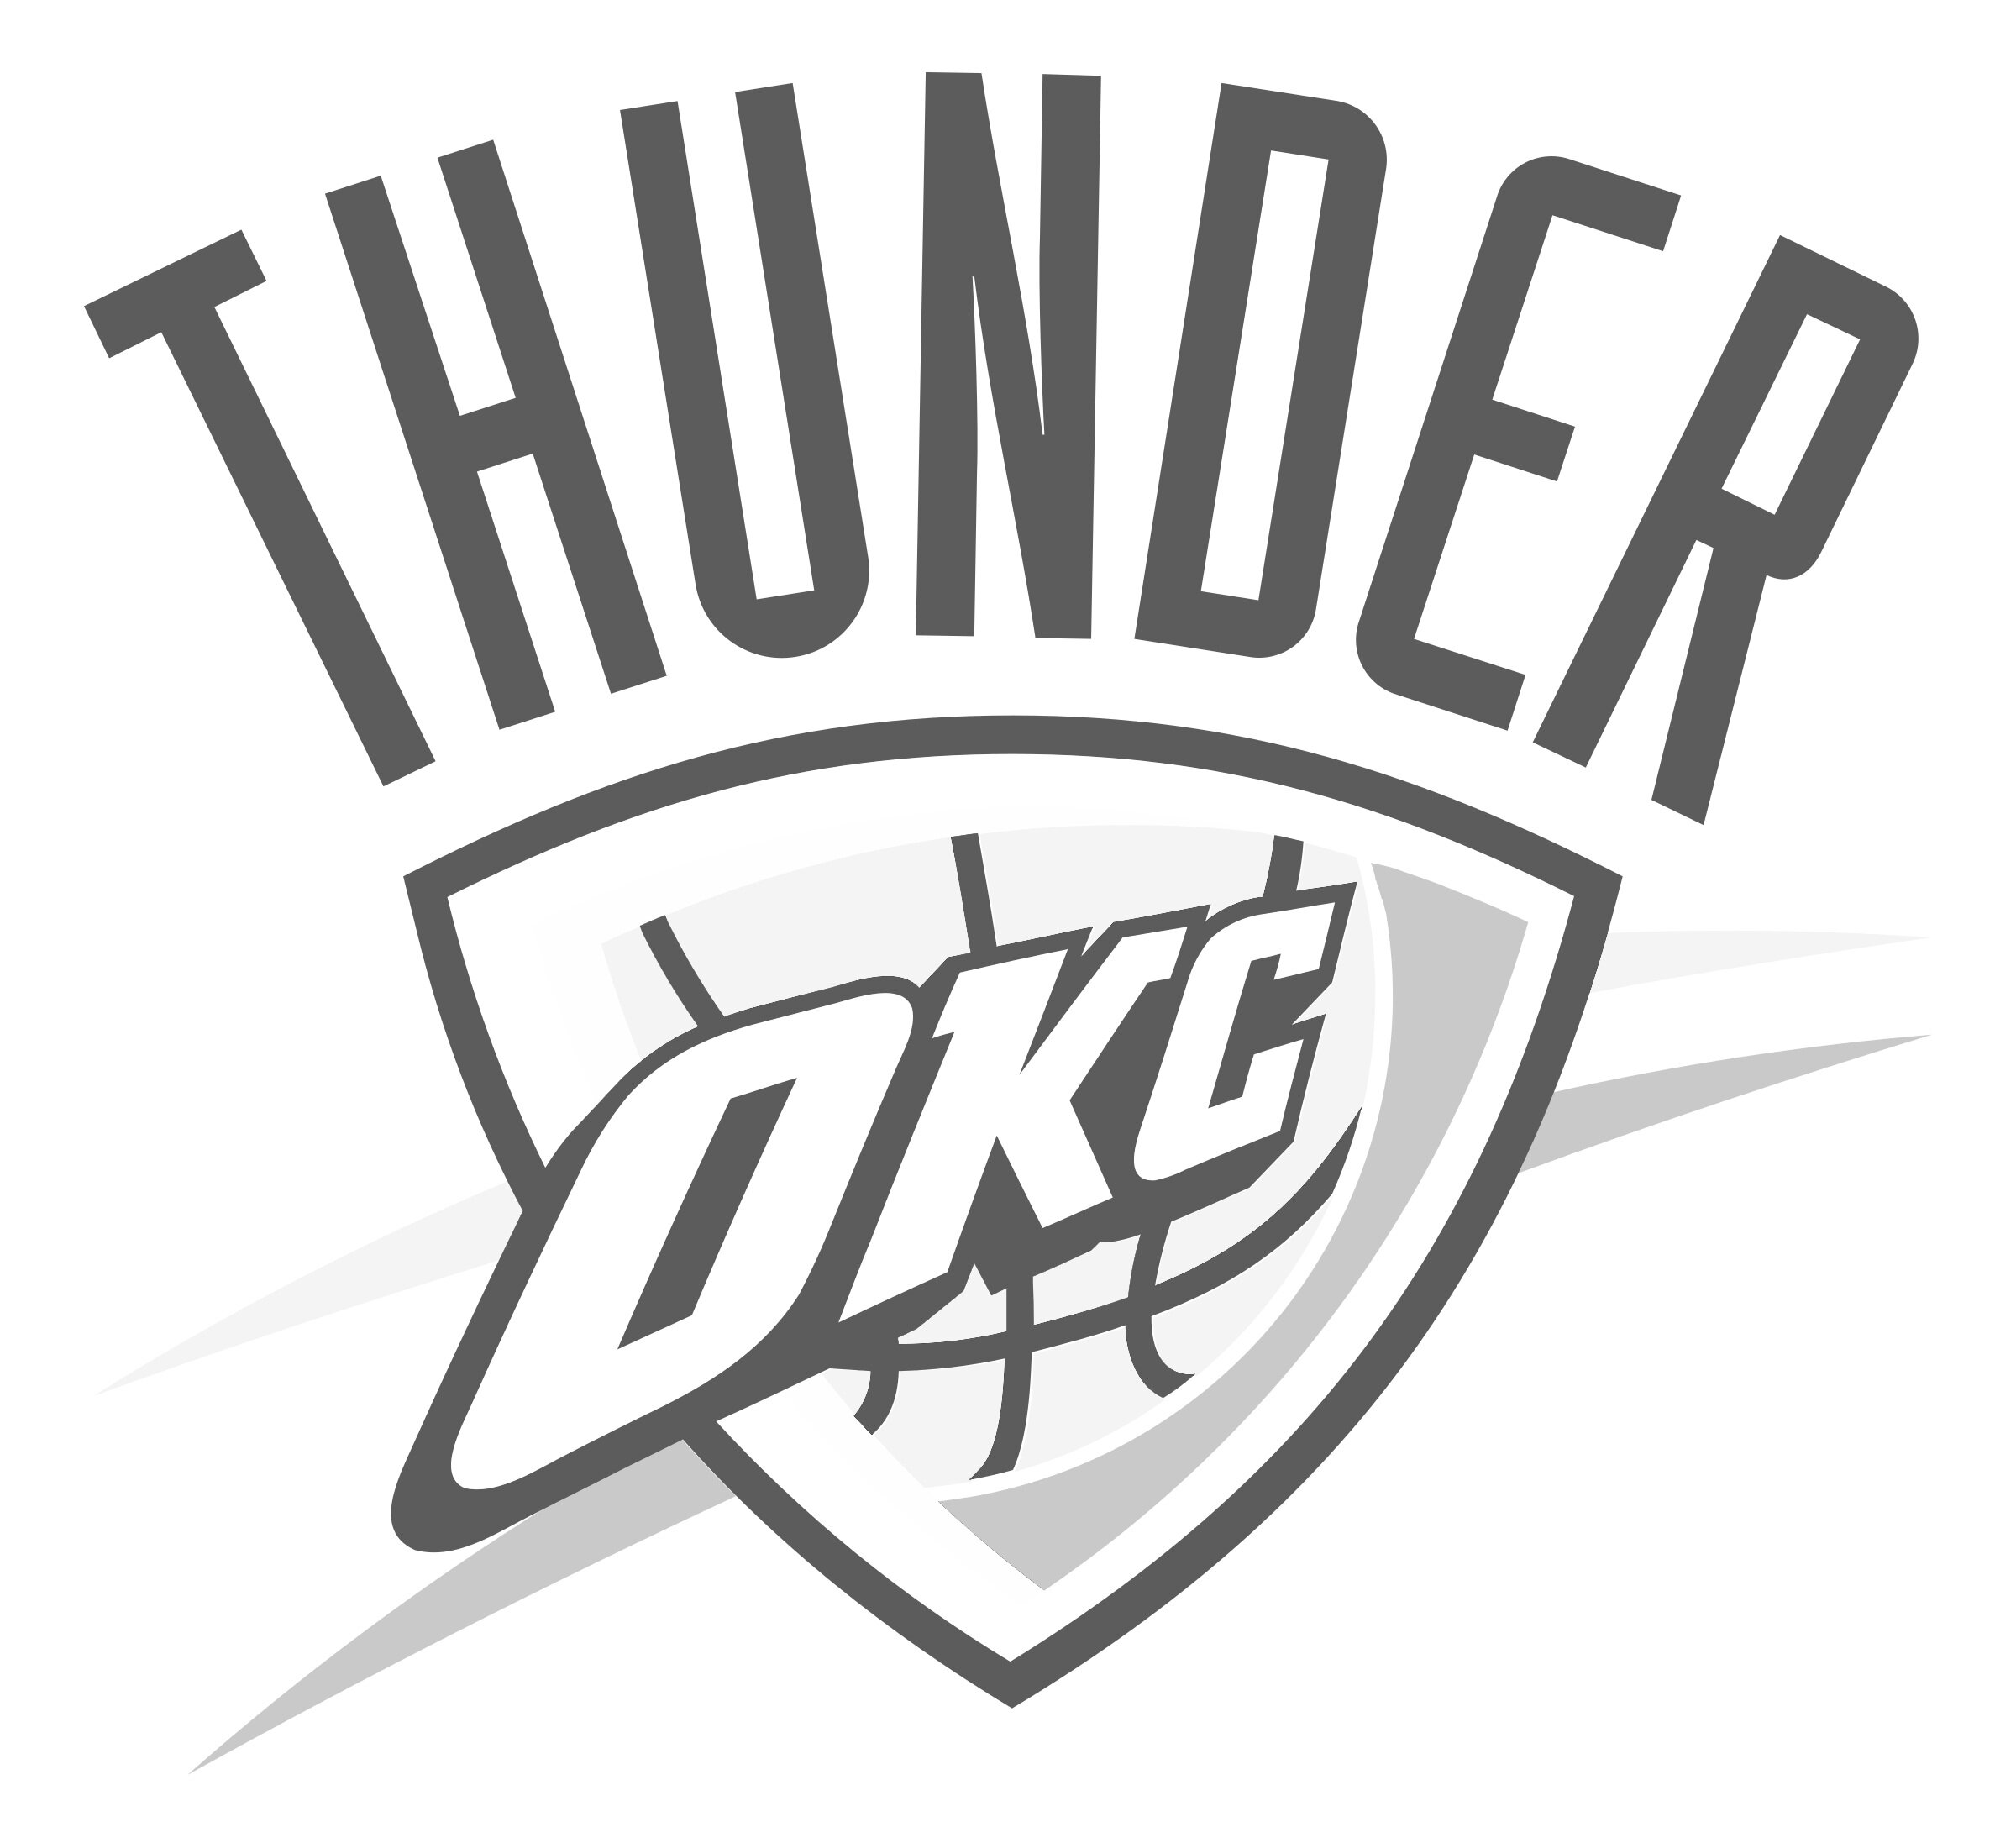 OKC Thunder Logo